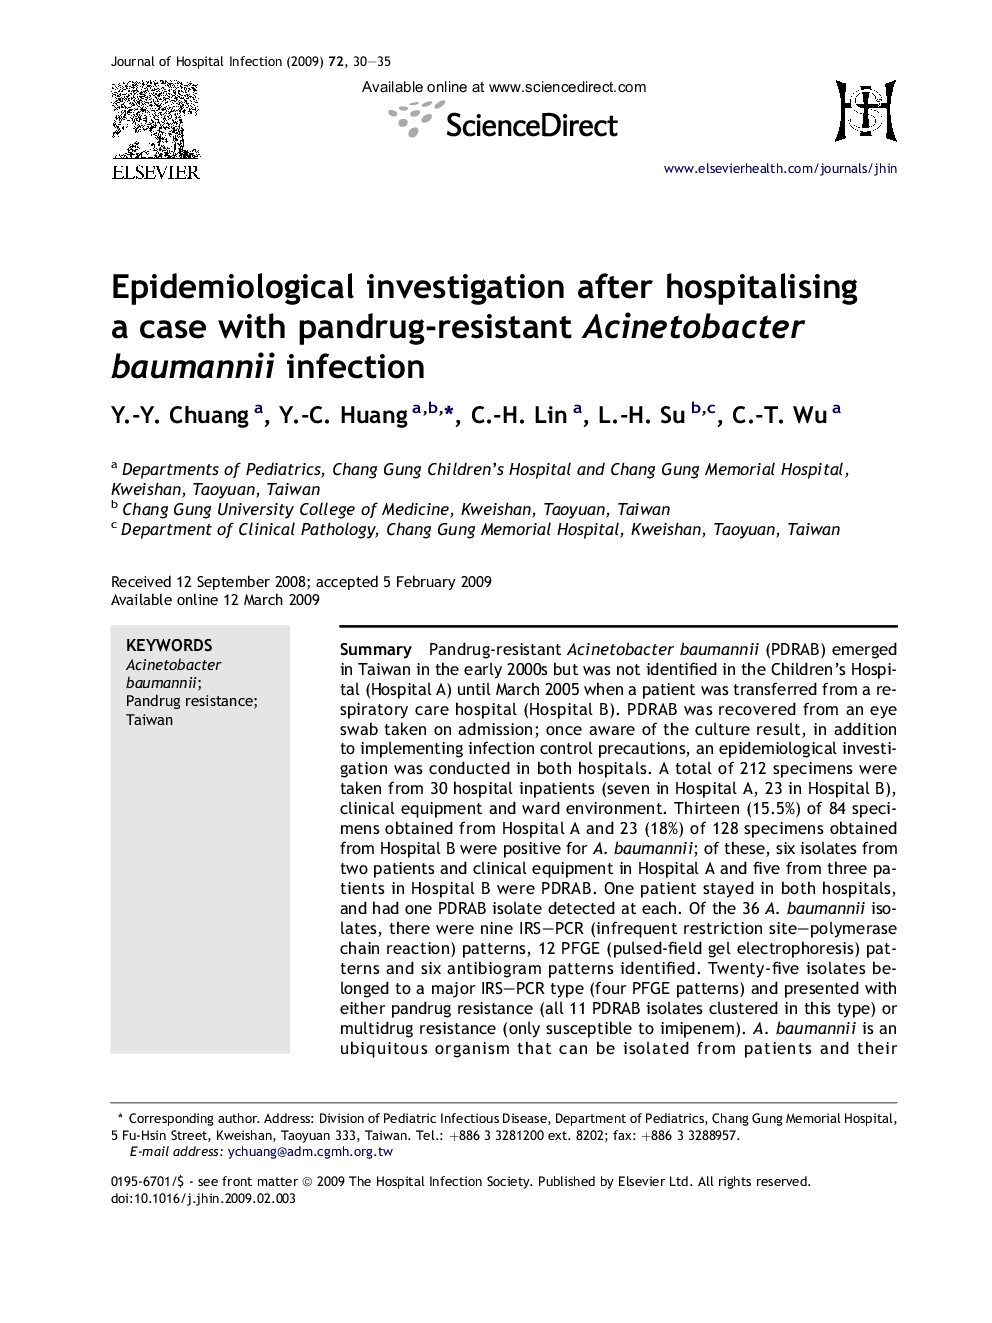 Epidemiological investigation after hospitalising a case with pandrug-resistant Acinetobacter baumannii infection